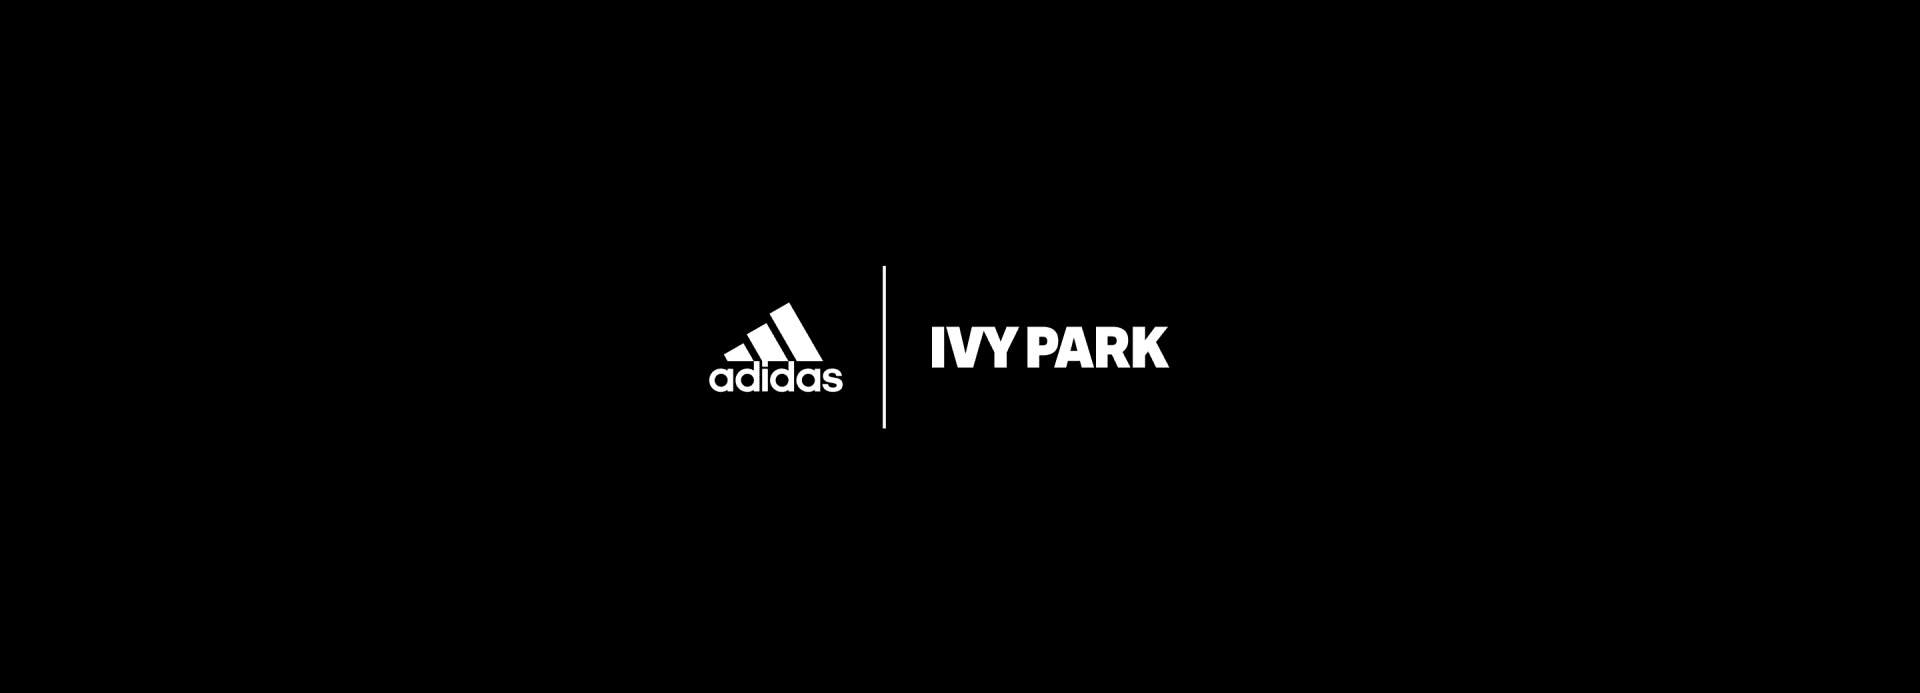 adidas x ivypark logo